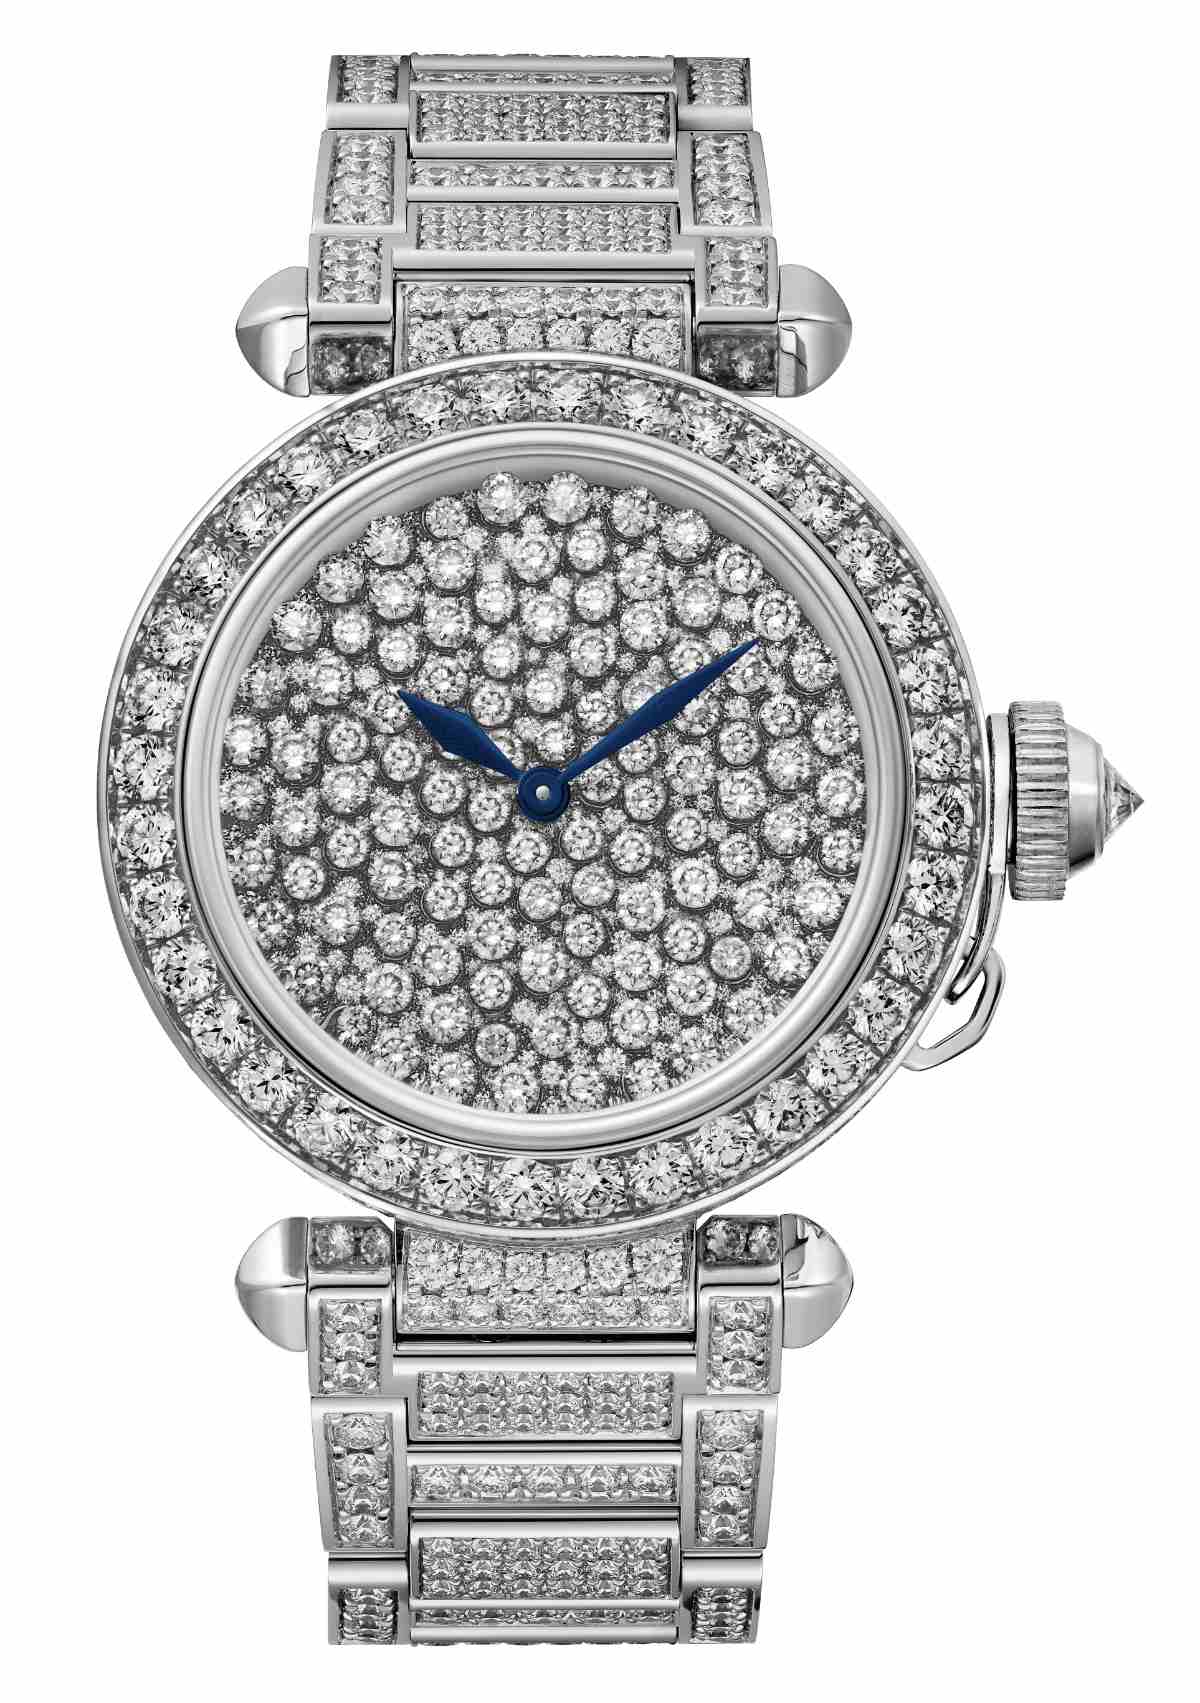 Pasha De Cartier: The Timeless Achiever’s Watch